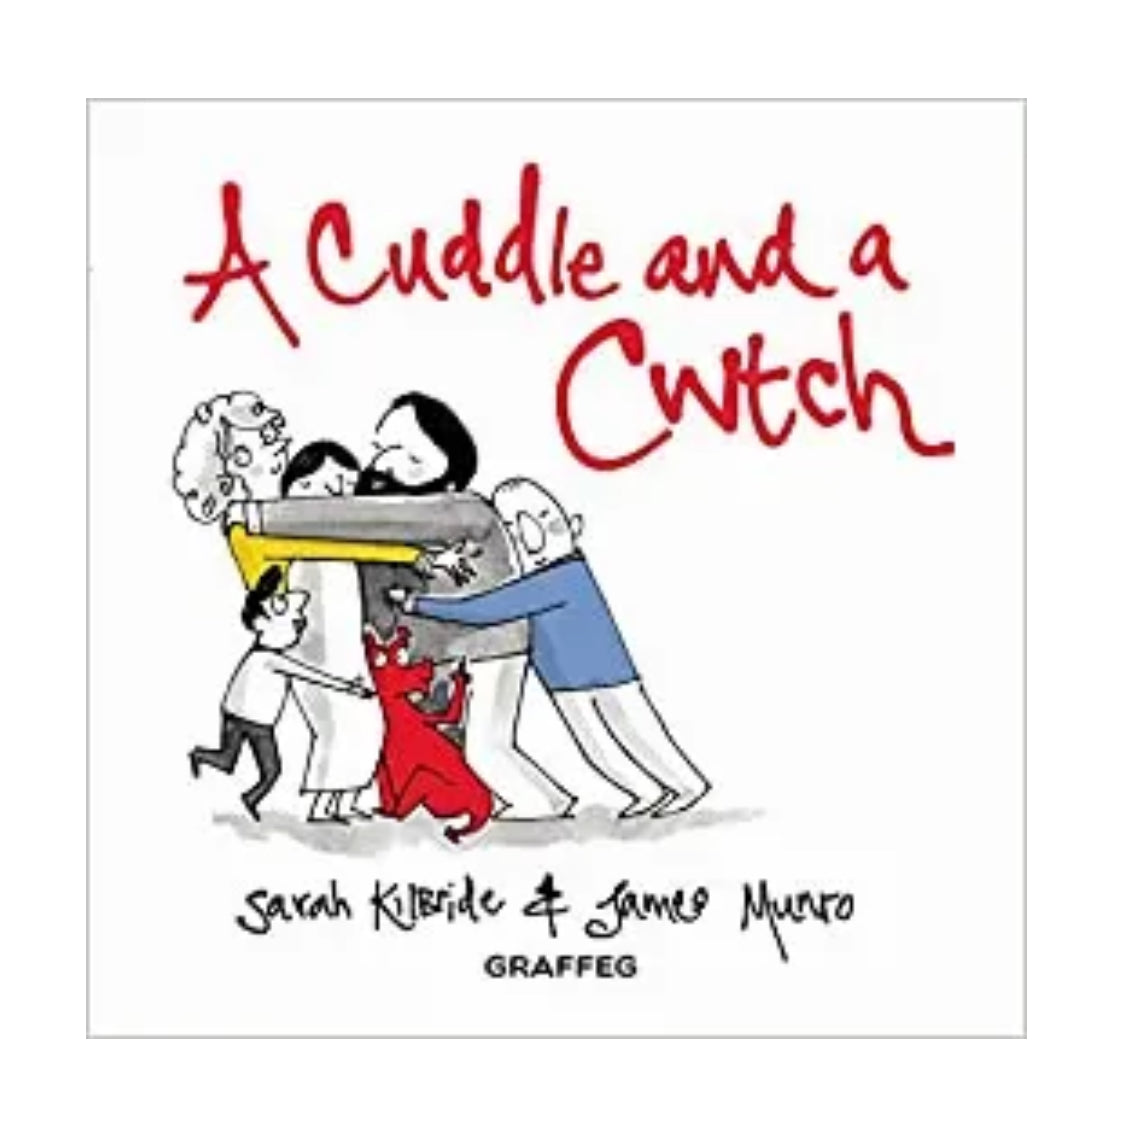 A Cuddle & A Cwtch By Sarah Kilbride & James Munro Signed copy